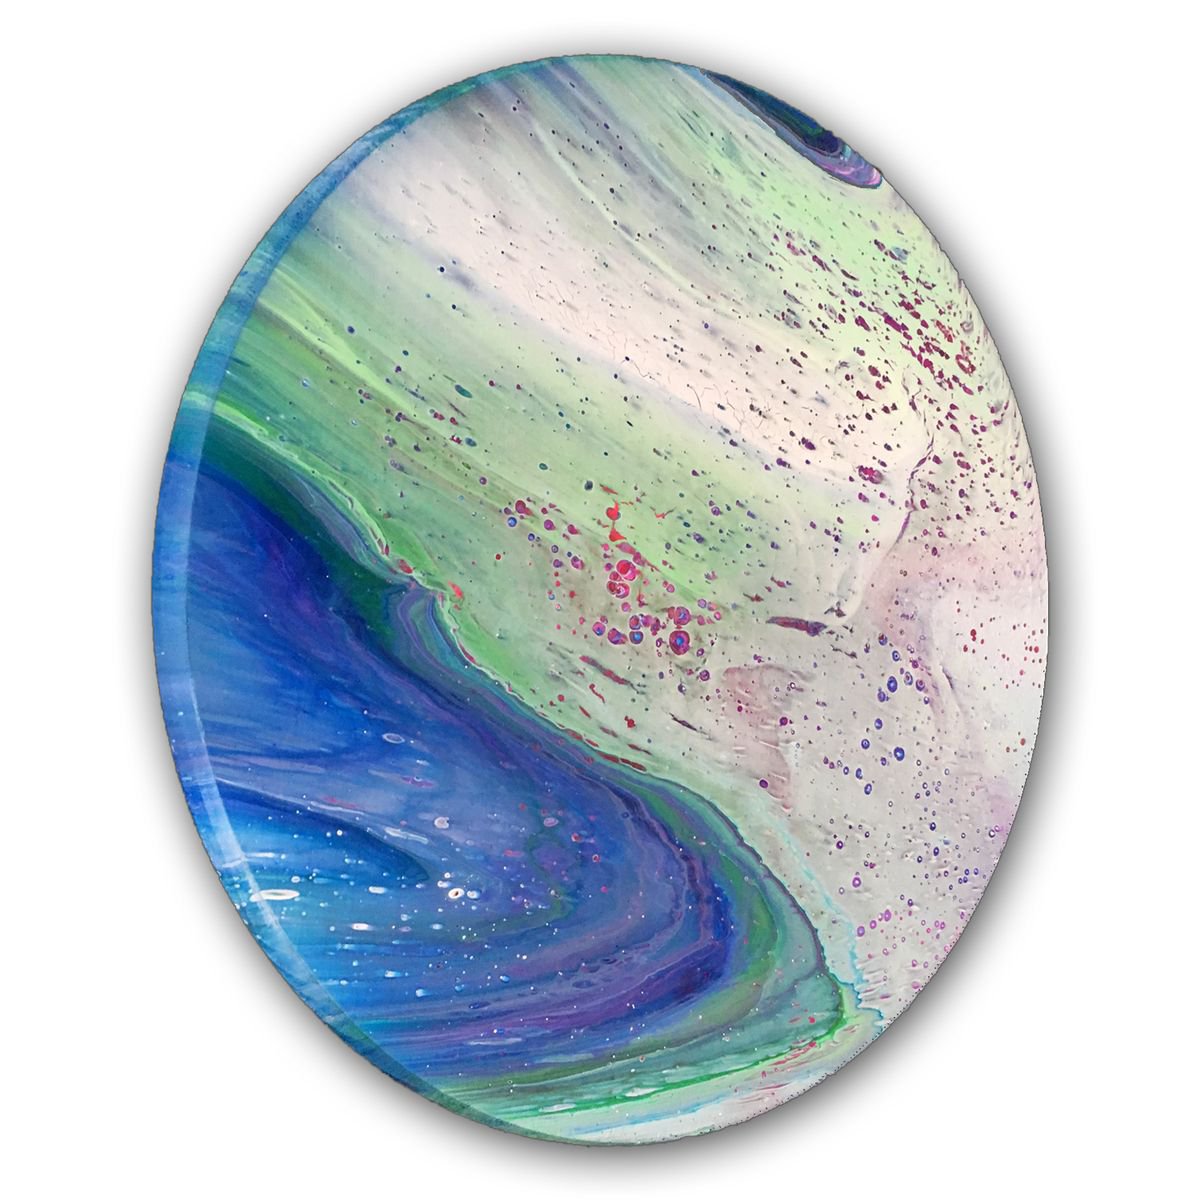 Cosmic Bubbles - FREE USA SHIPPING - Original Abstract PMS Circular Fluid Acrylic Painti... by Preston M. Smith (PMS)